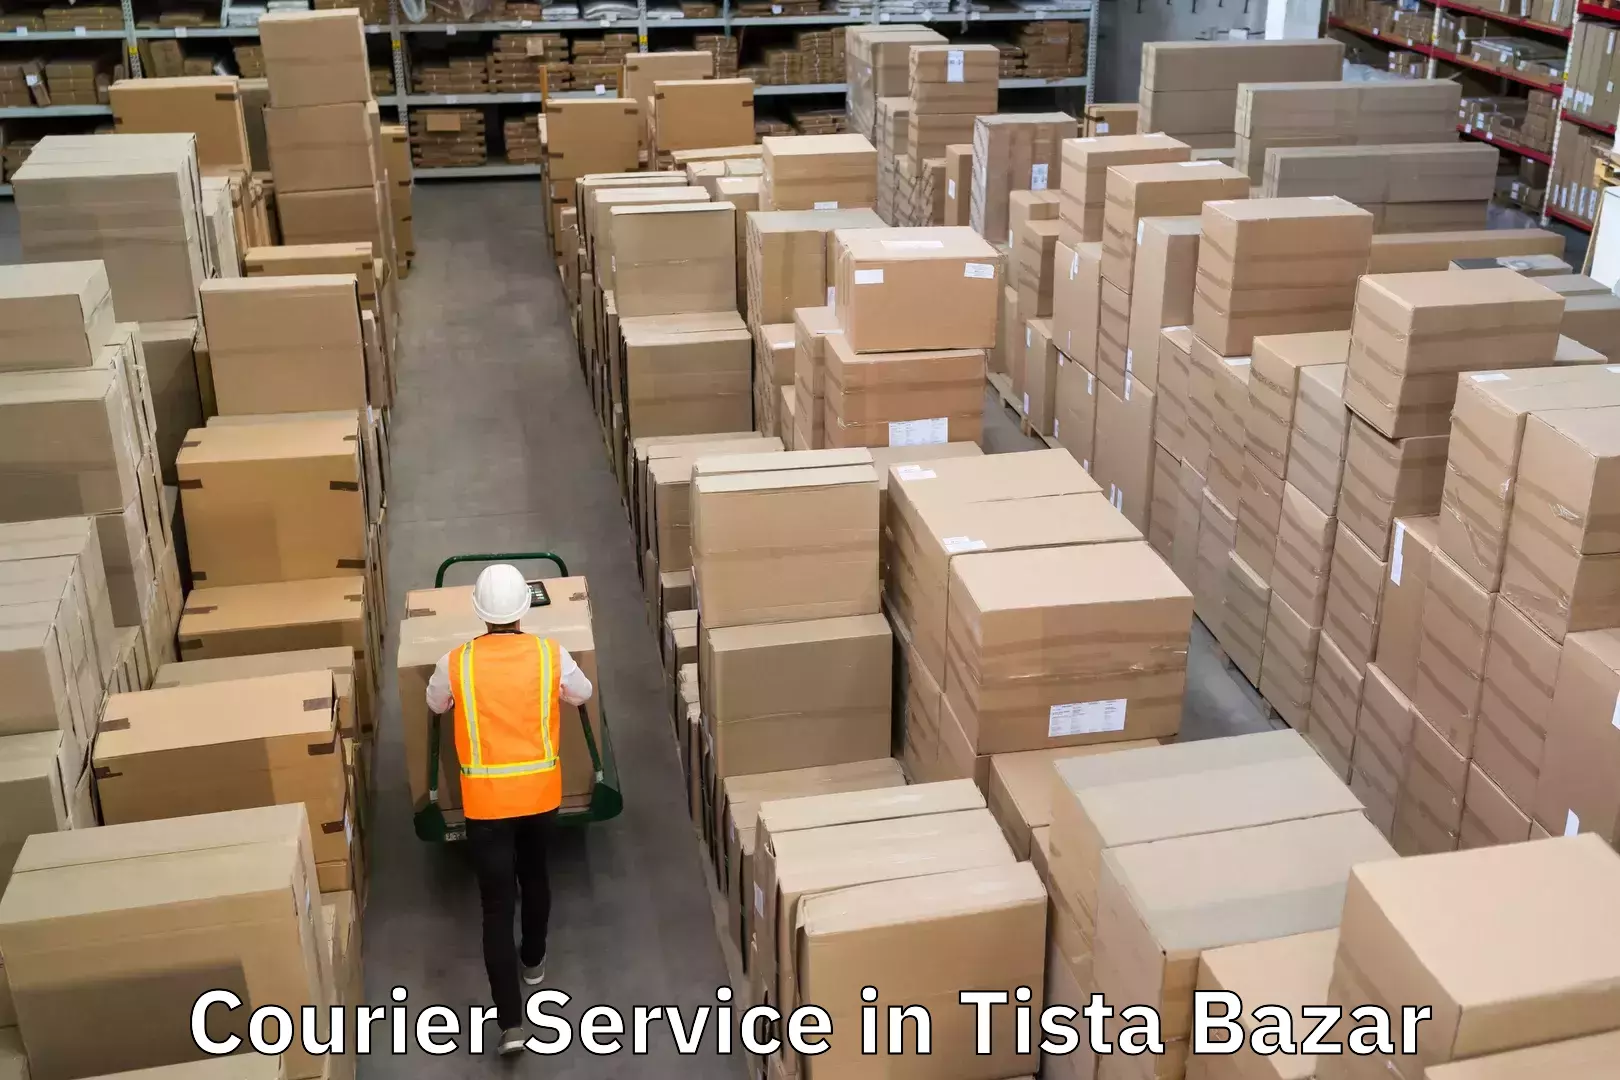 Express delivery capabilities in Tista Bazar